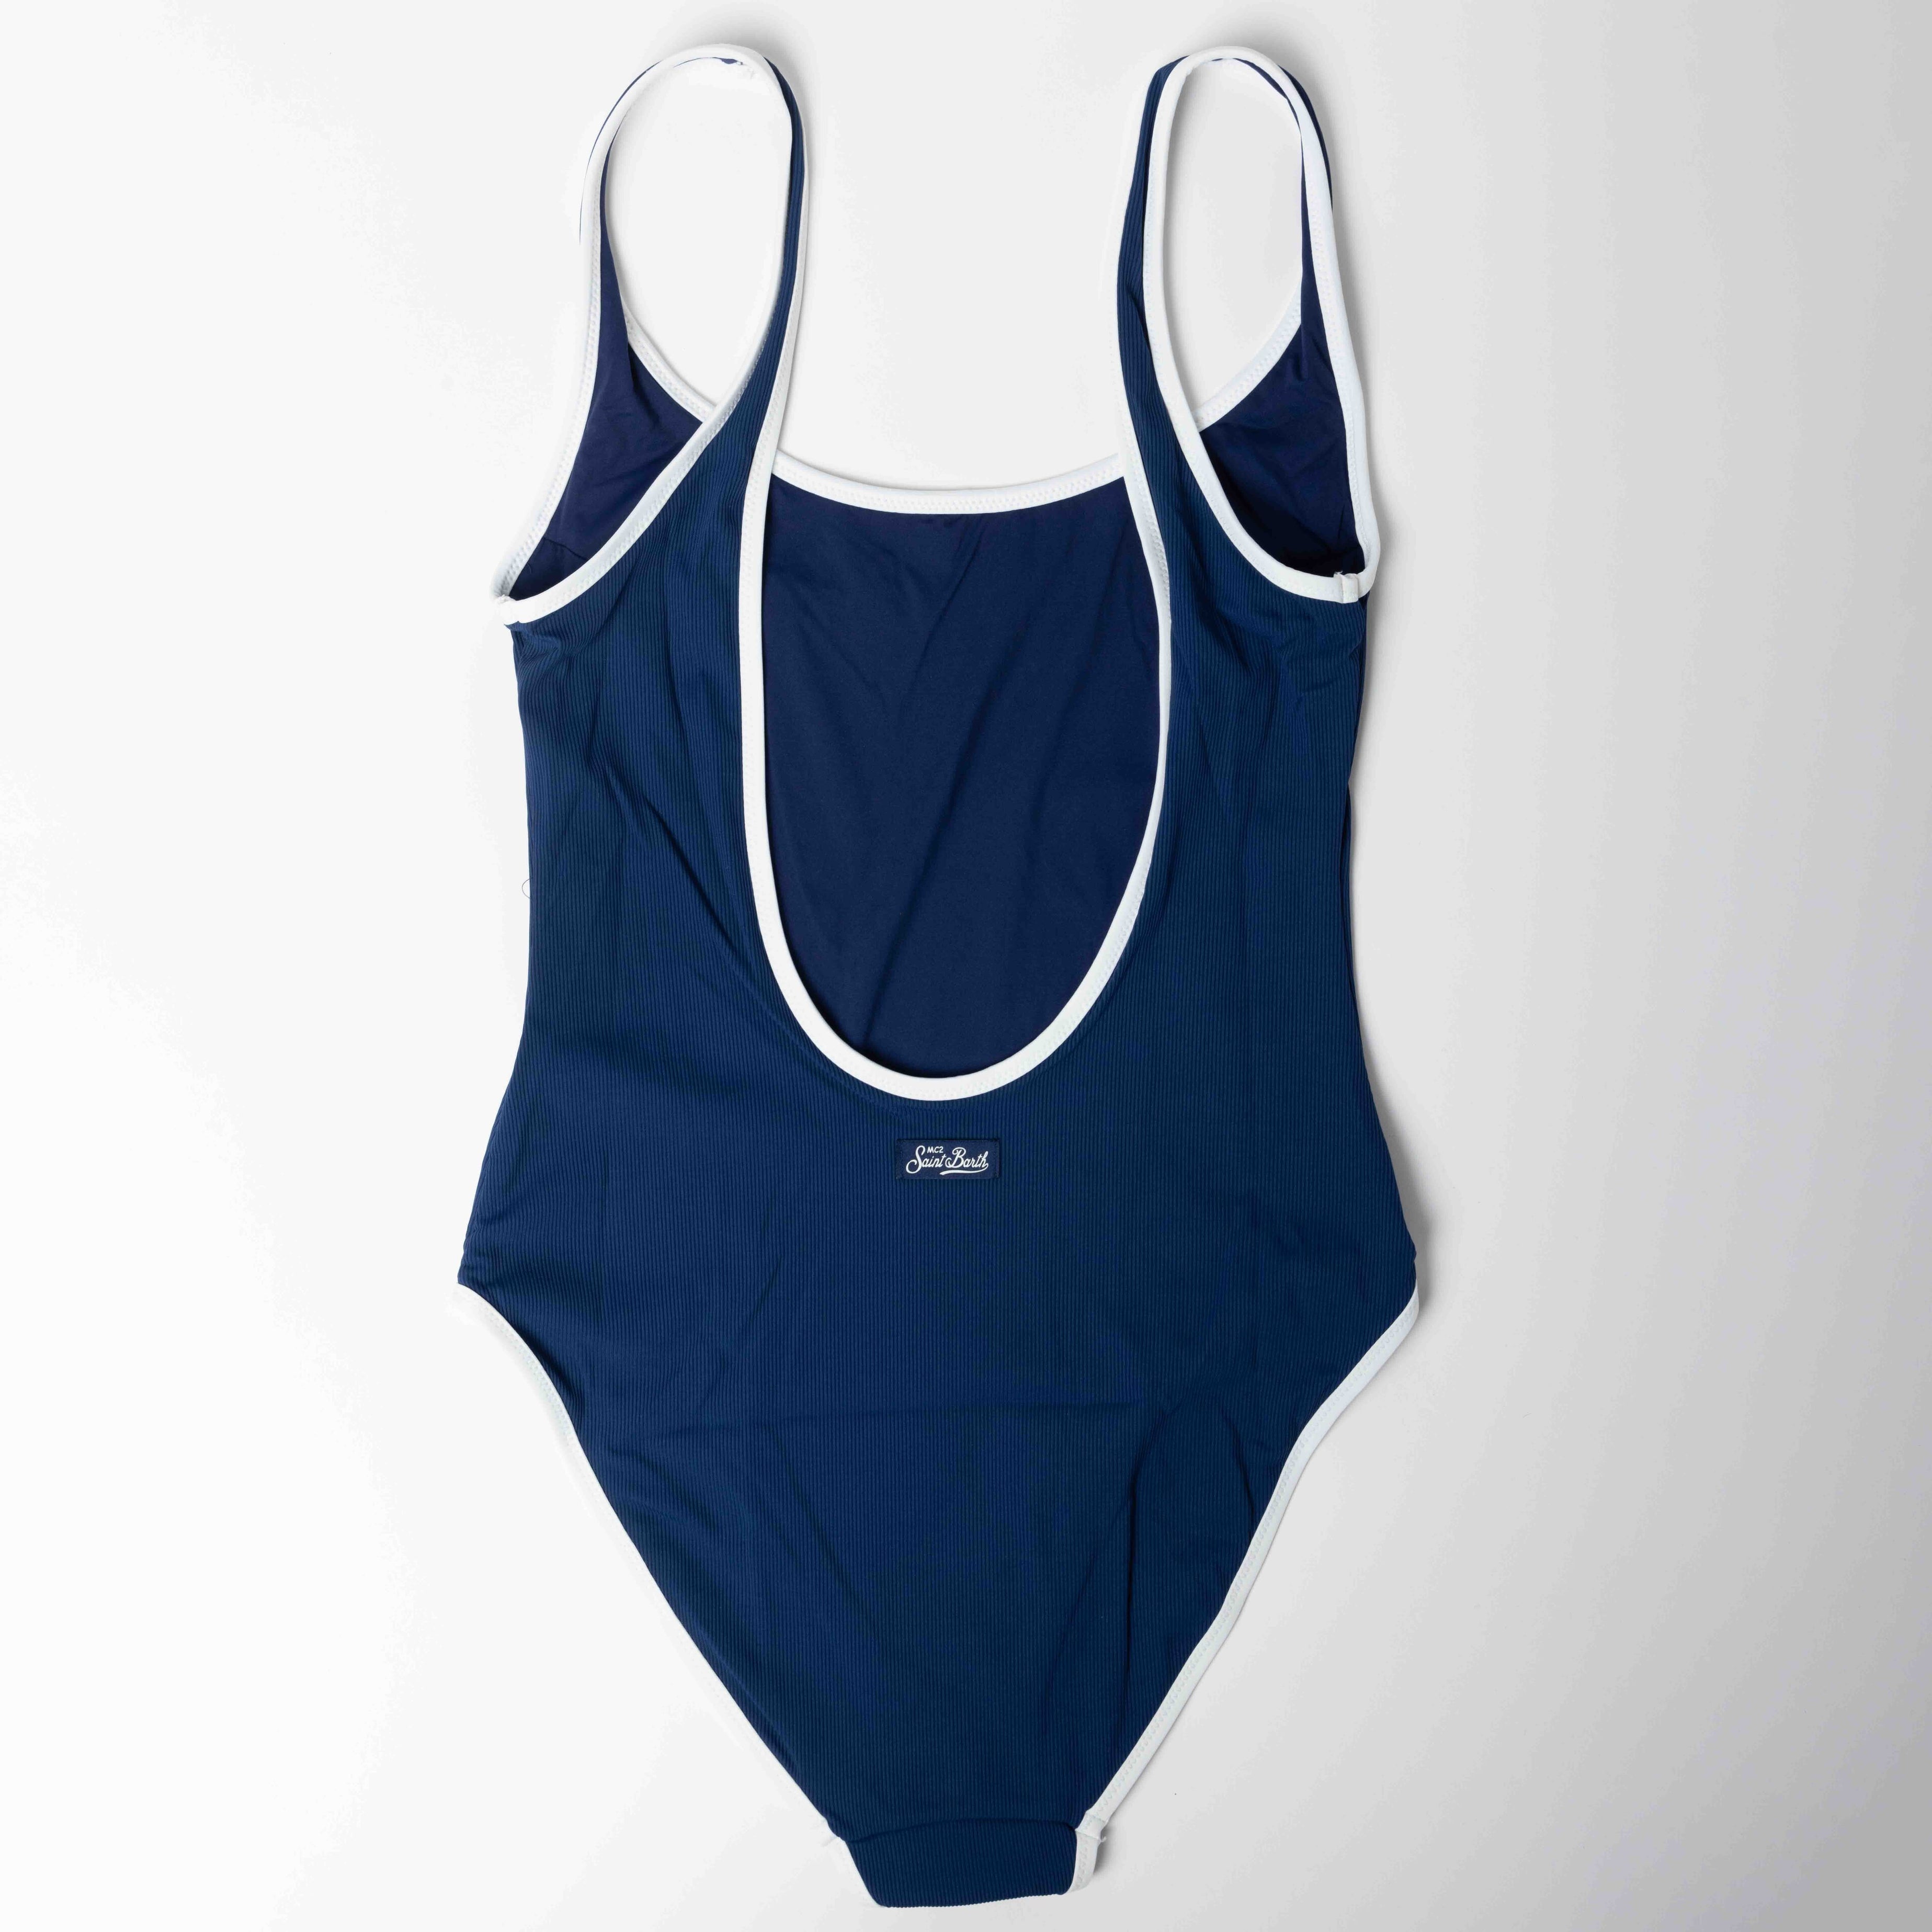 Piero x Saint Barth women's one-piece swimsuit